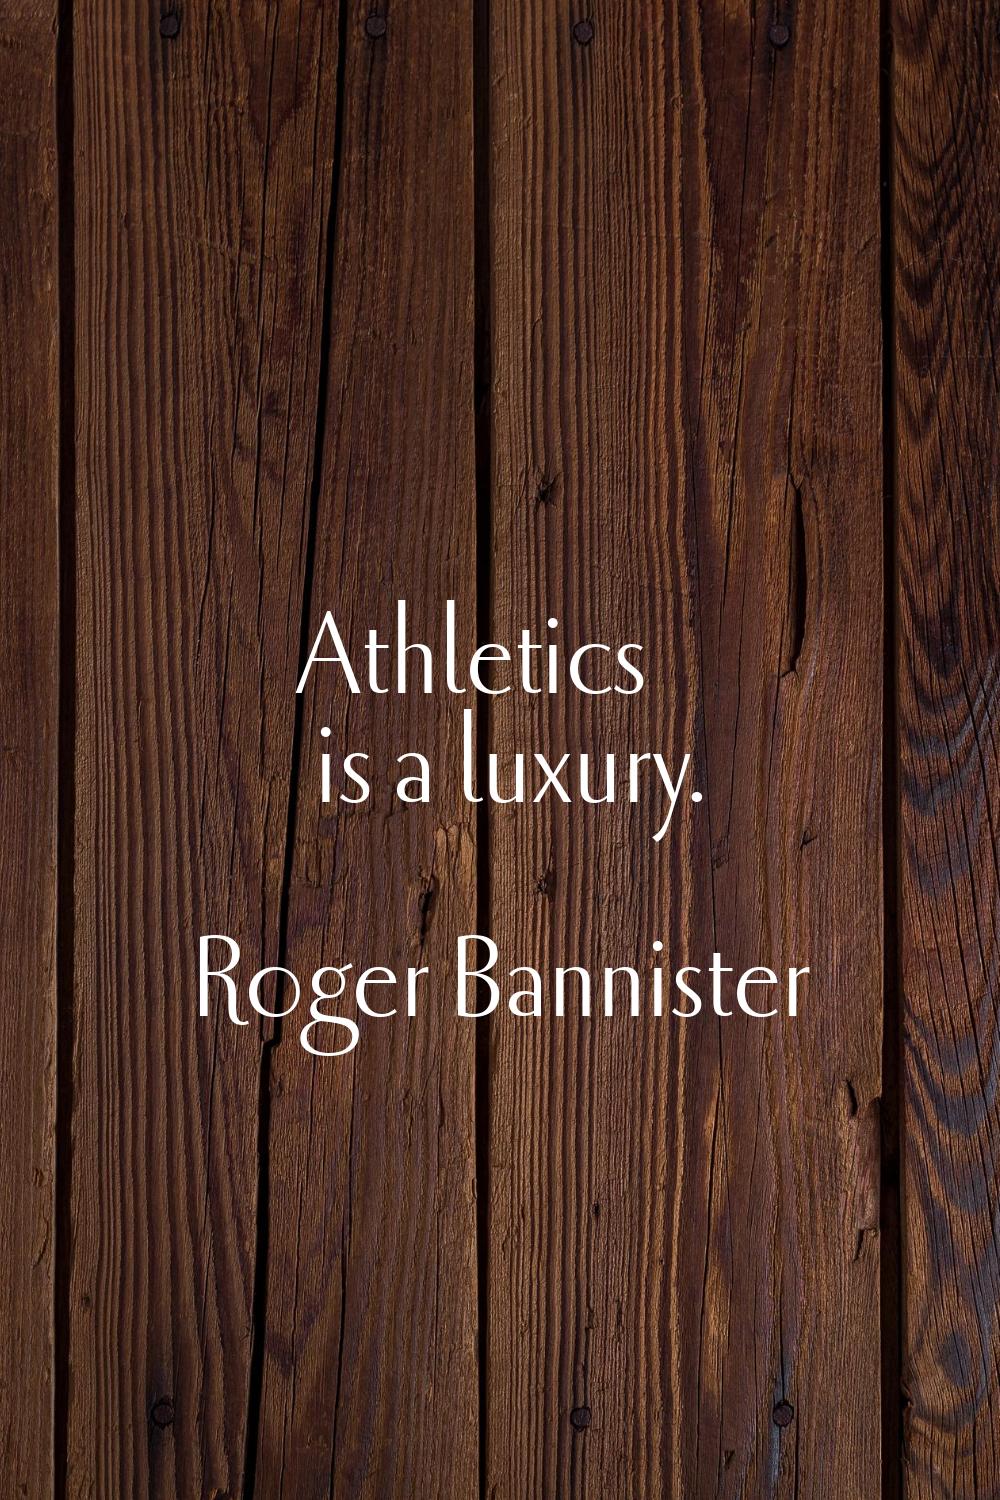 Athletics is a luxury.